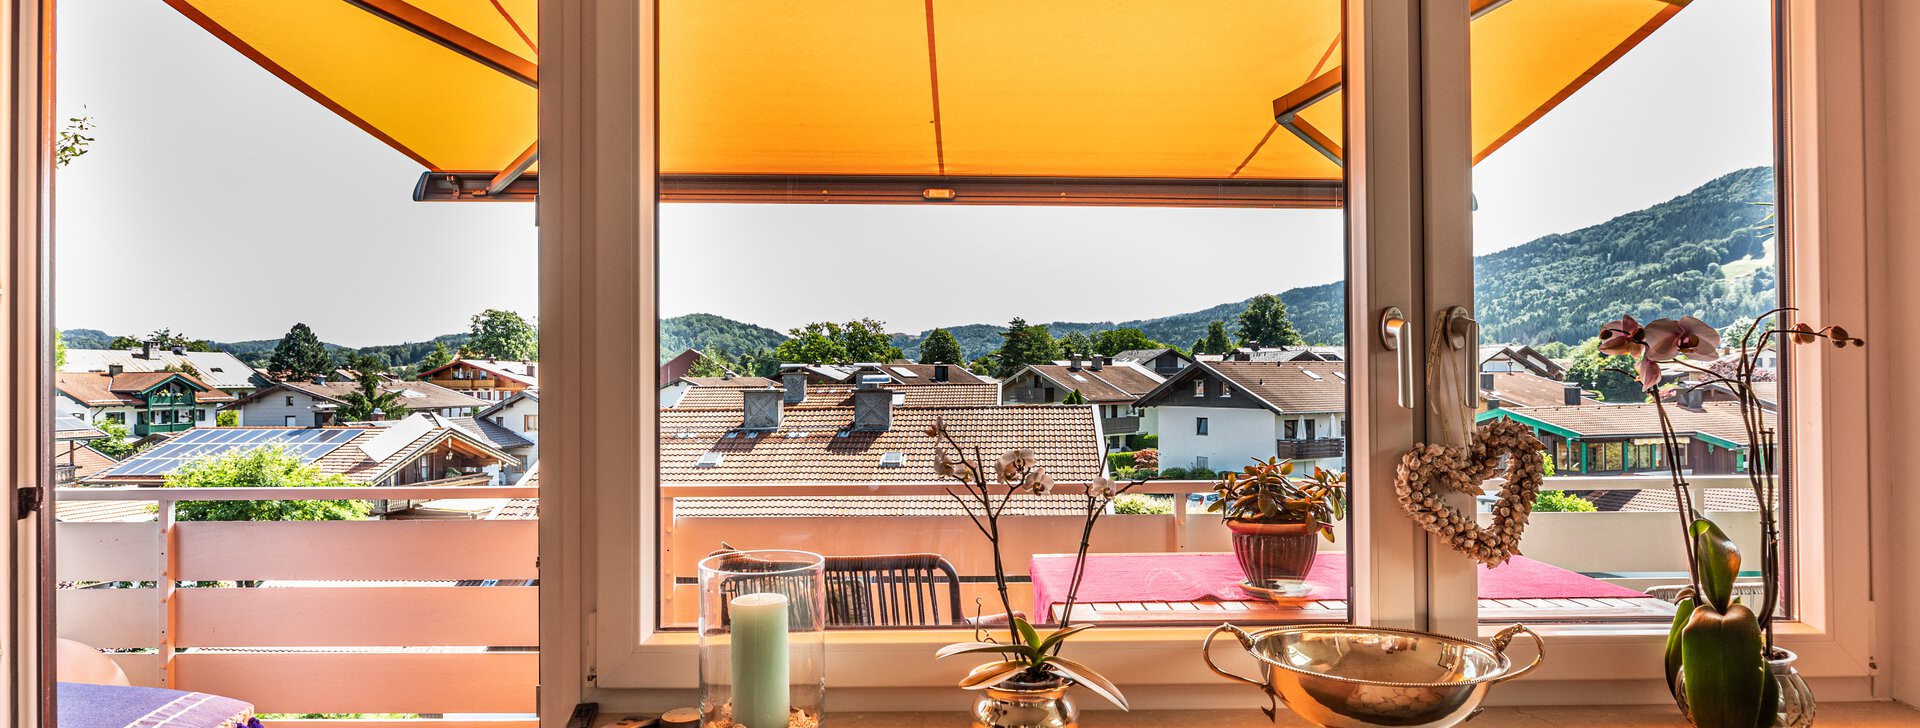 Balkon Dachgeschosswohnung in Bergen, Immobilie kaufen, Bergen | © HausBauHaus GmbH